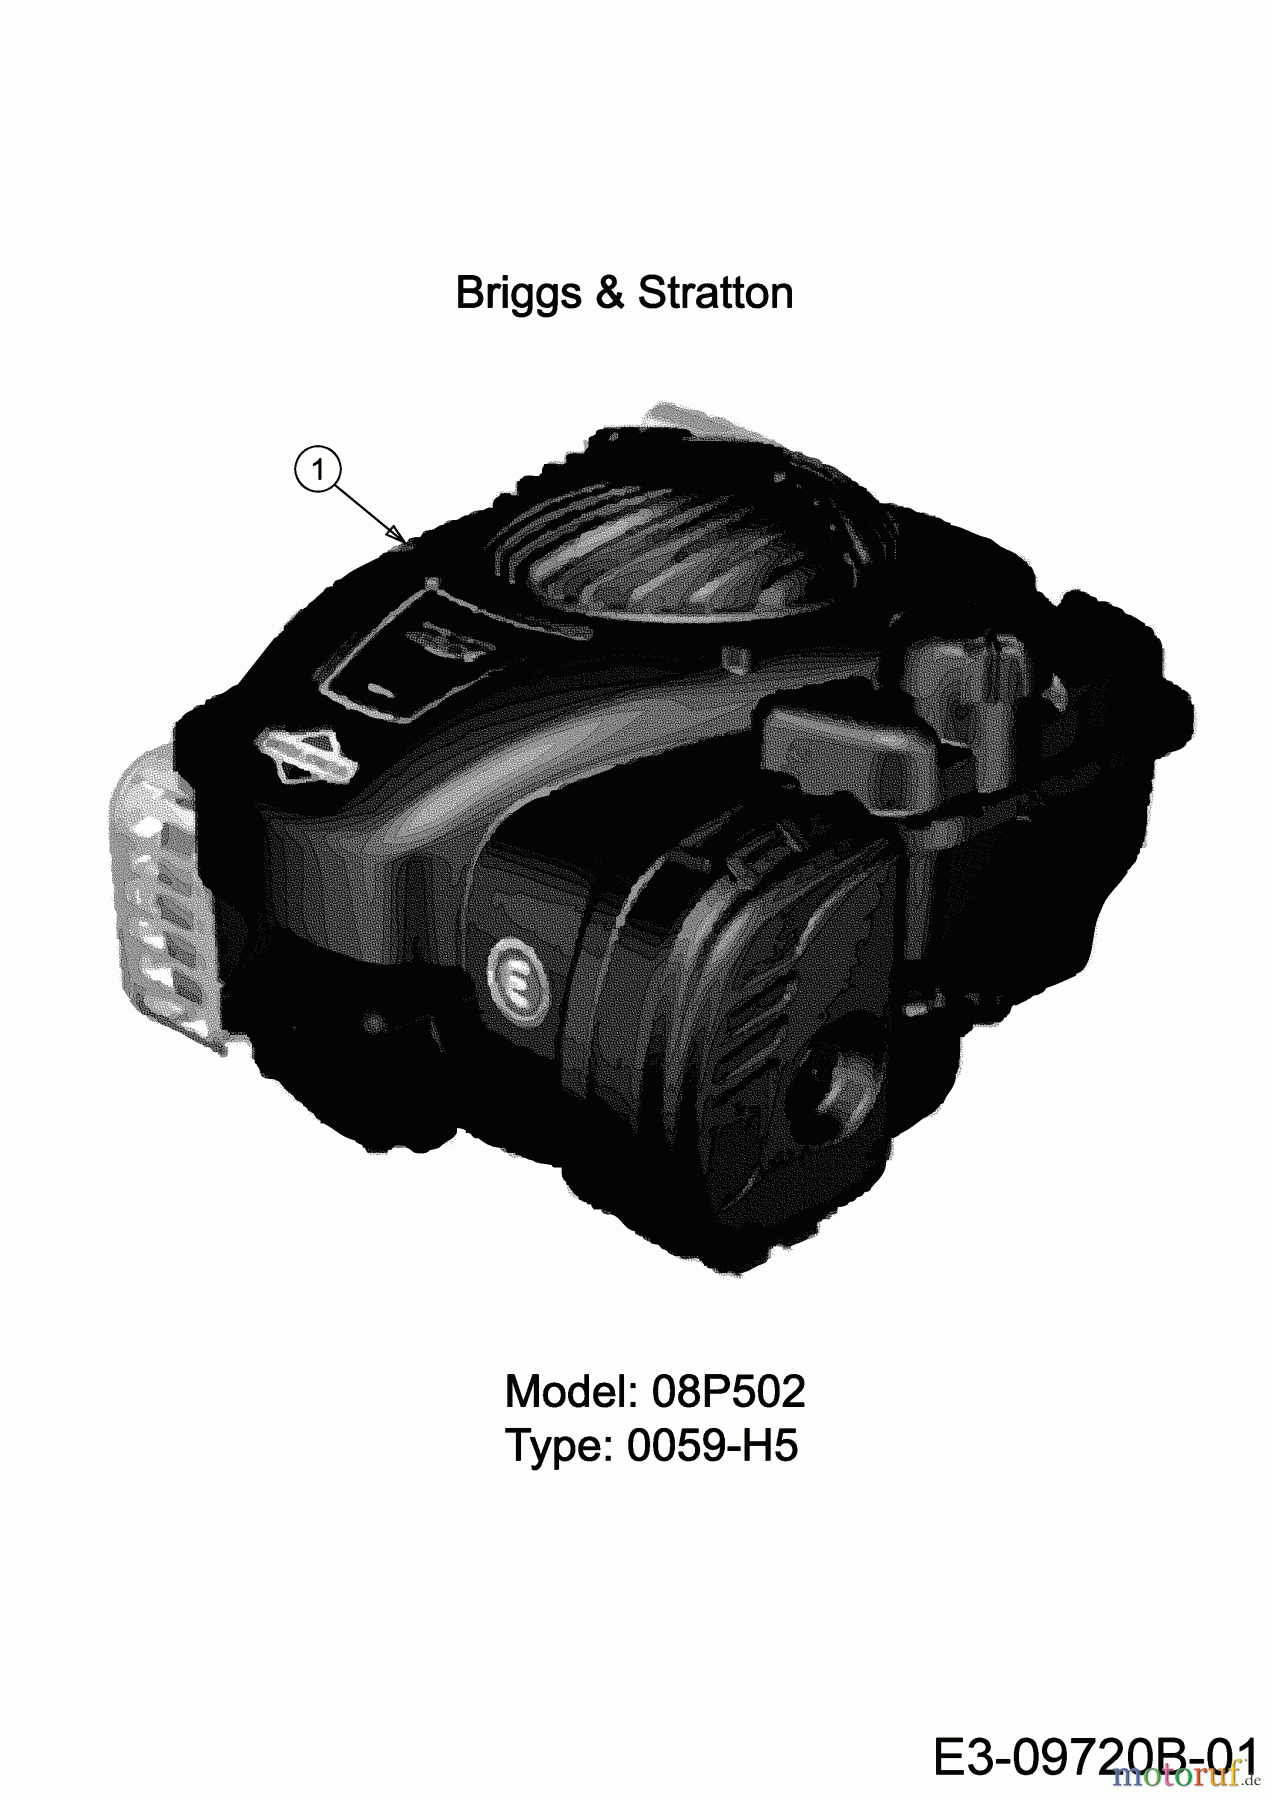  MTD Petrol mower 51 BC 11E-025J600 (2019) Engine Briggs & Stratton